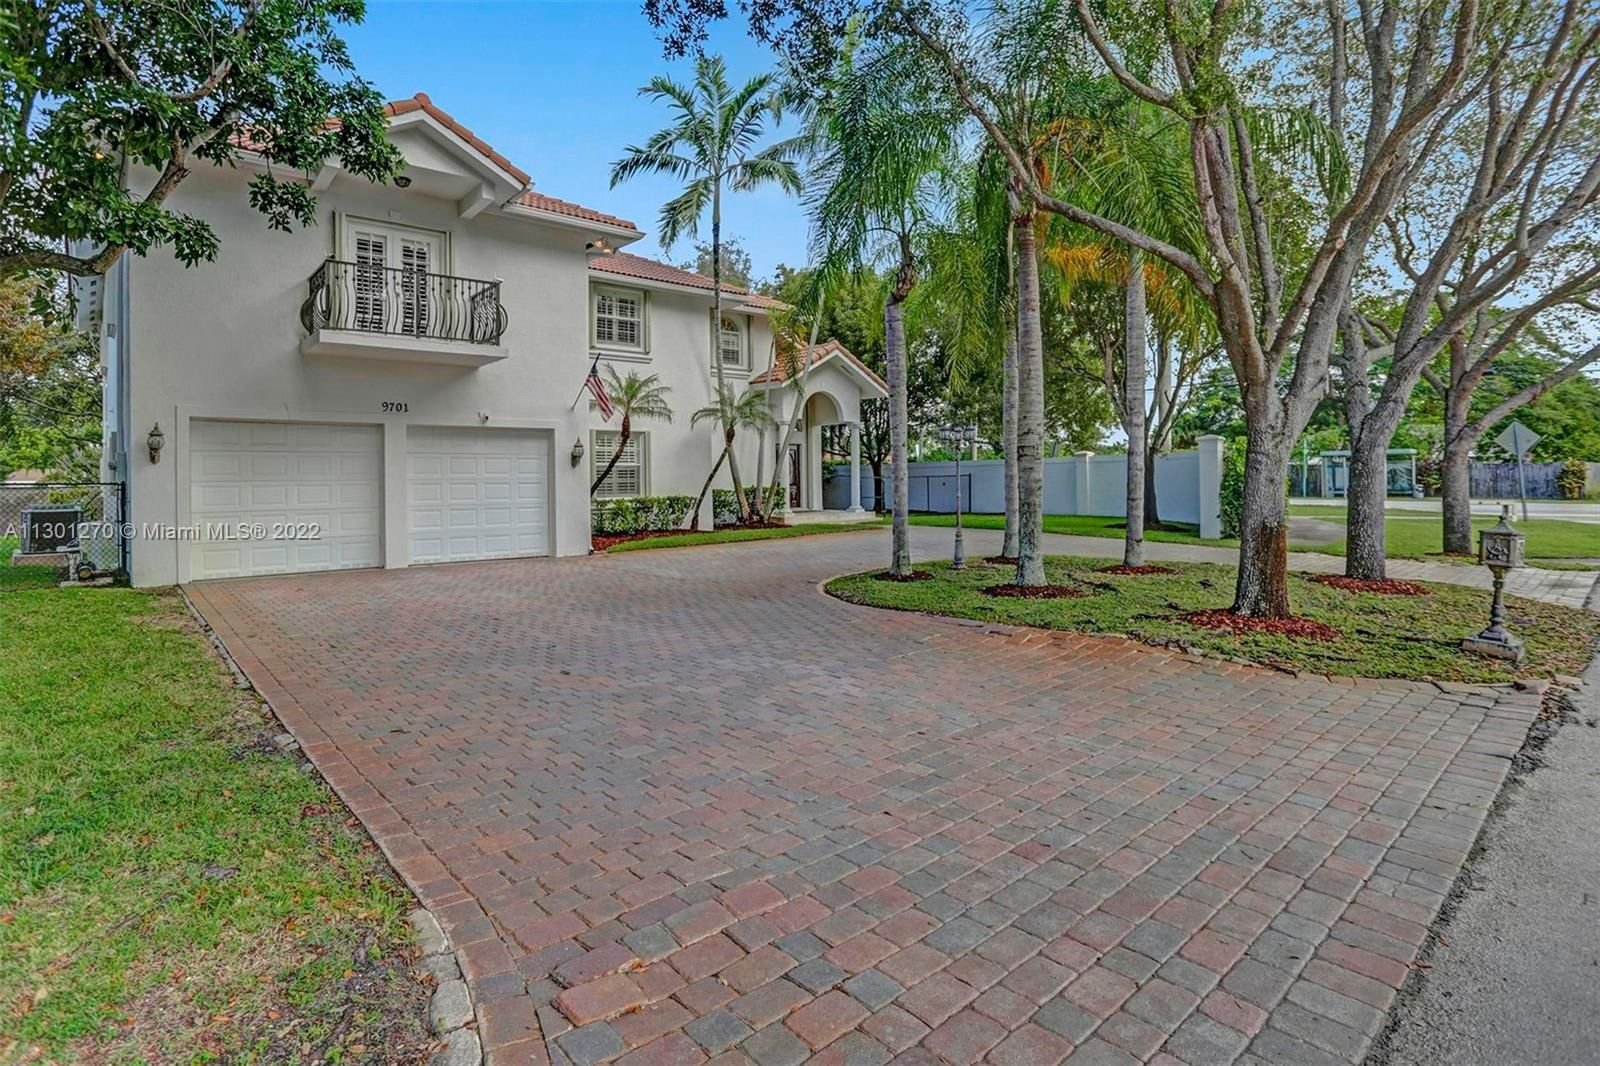 Real estate property located at 9701 94th Ter, Miami-Dade County, Miami, FL